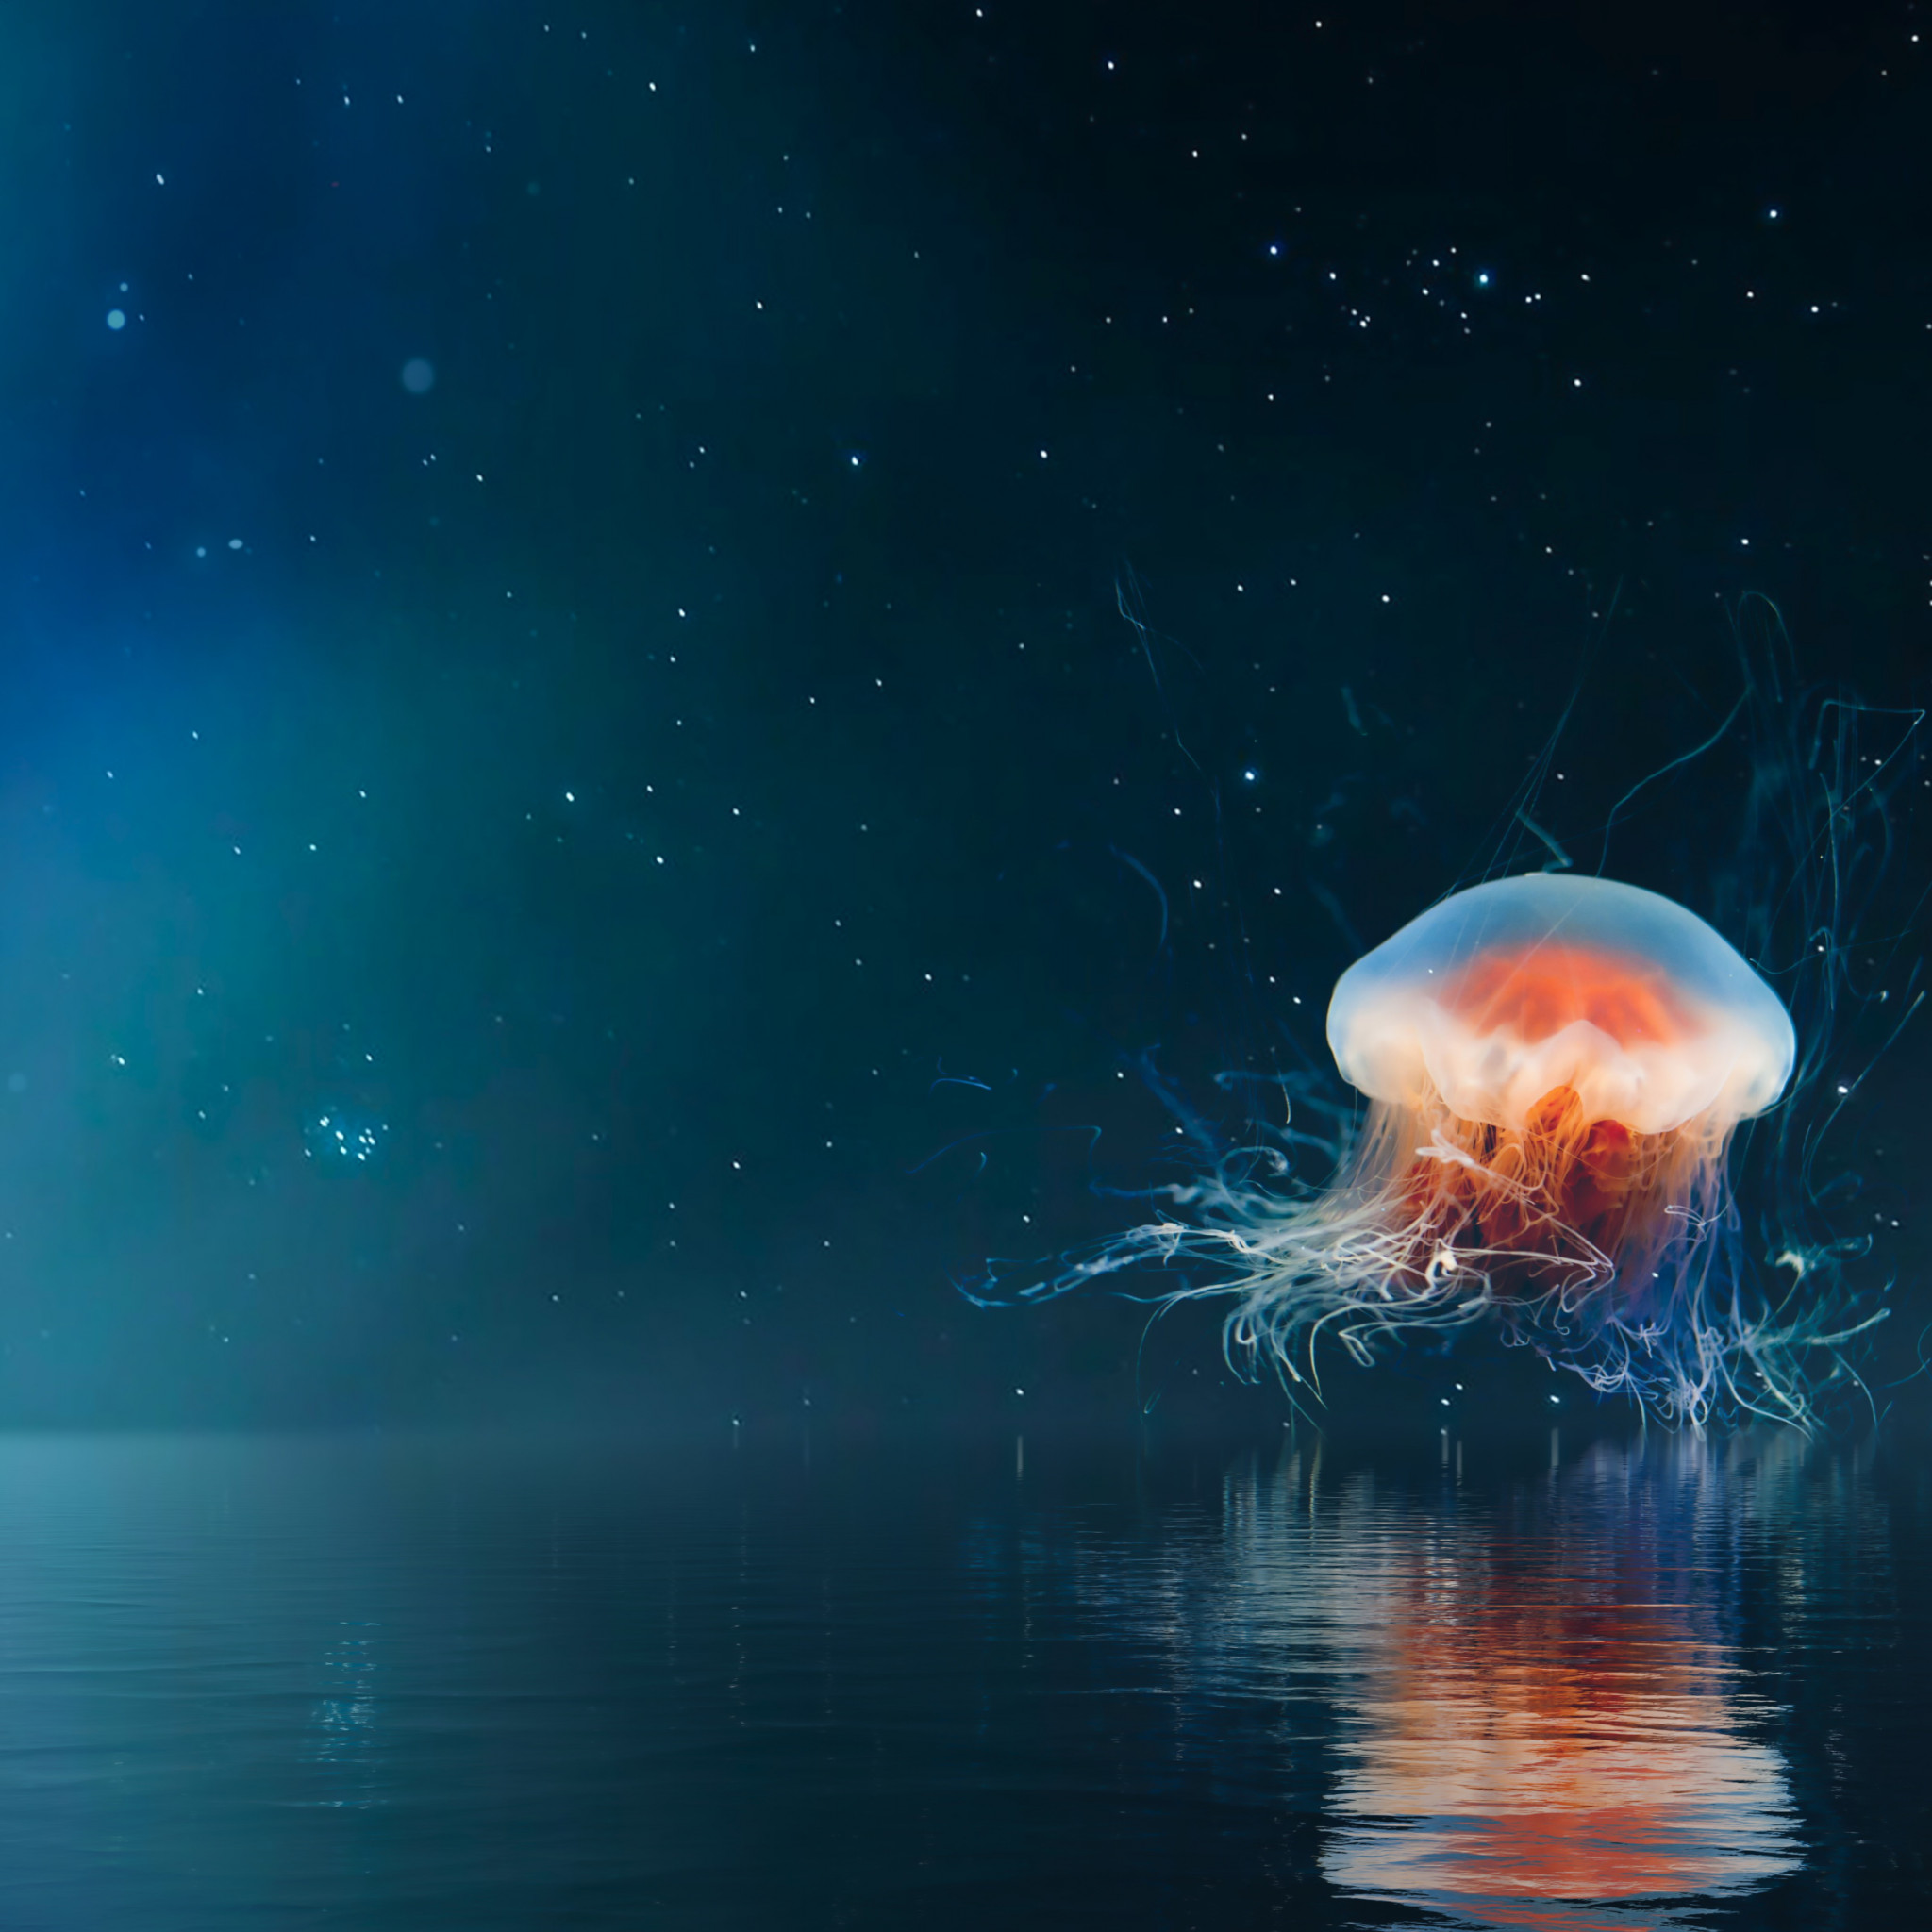 Jellyfish on the night sky wallpaper 2048x2048